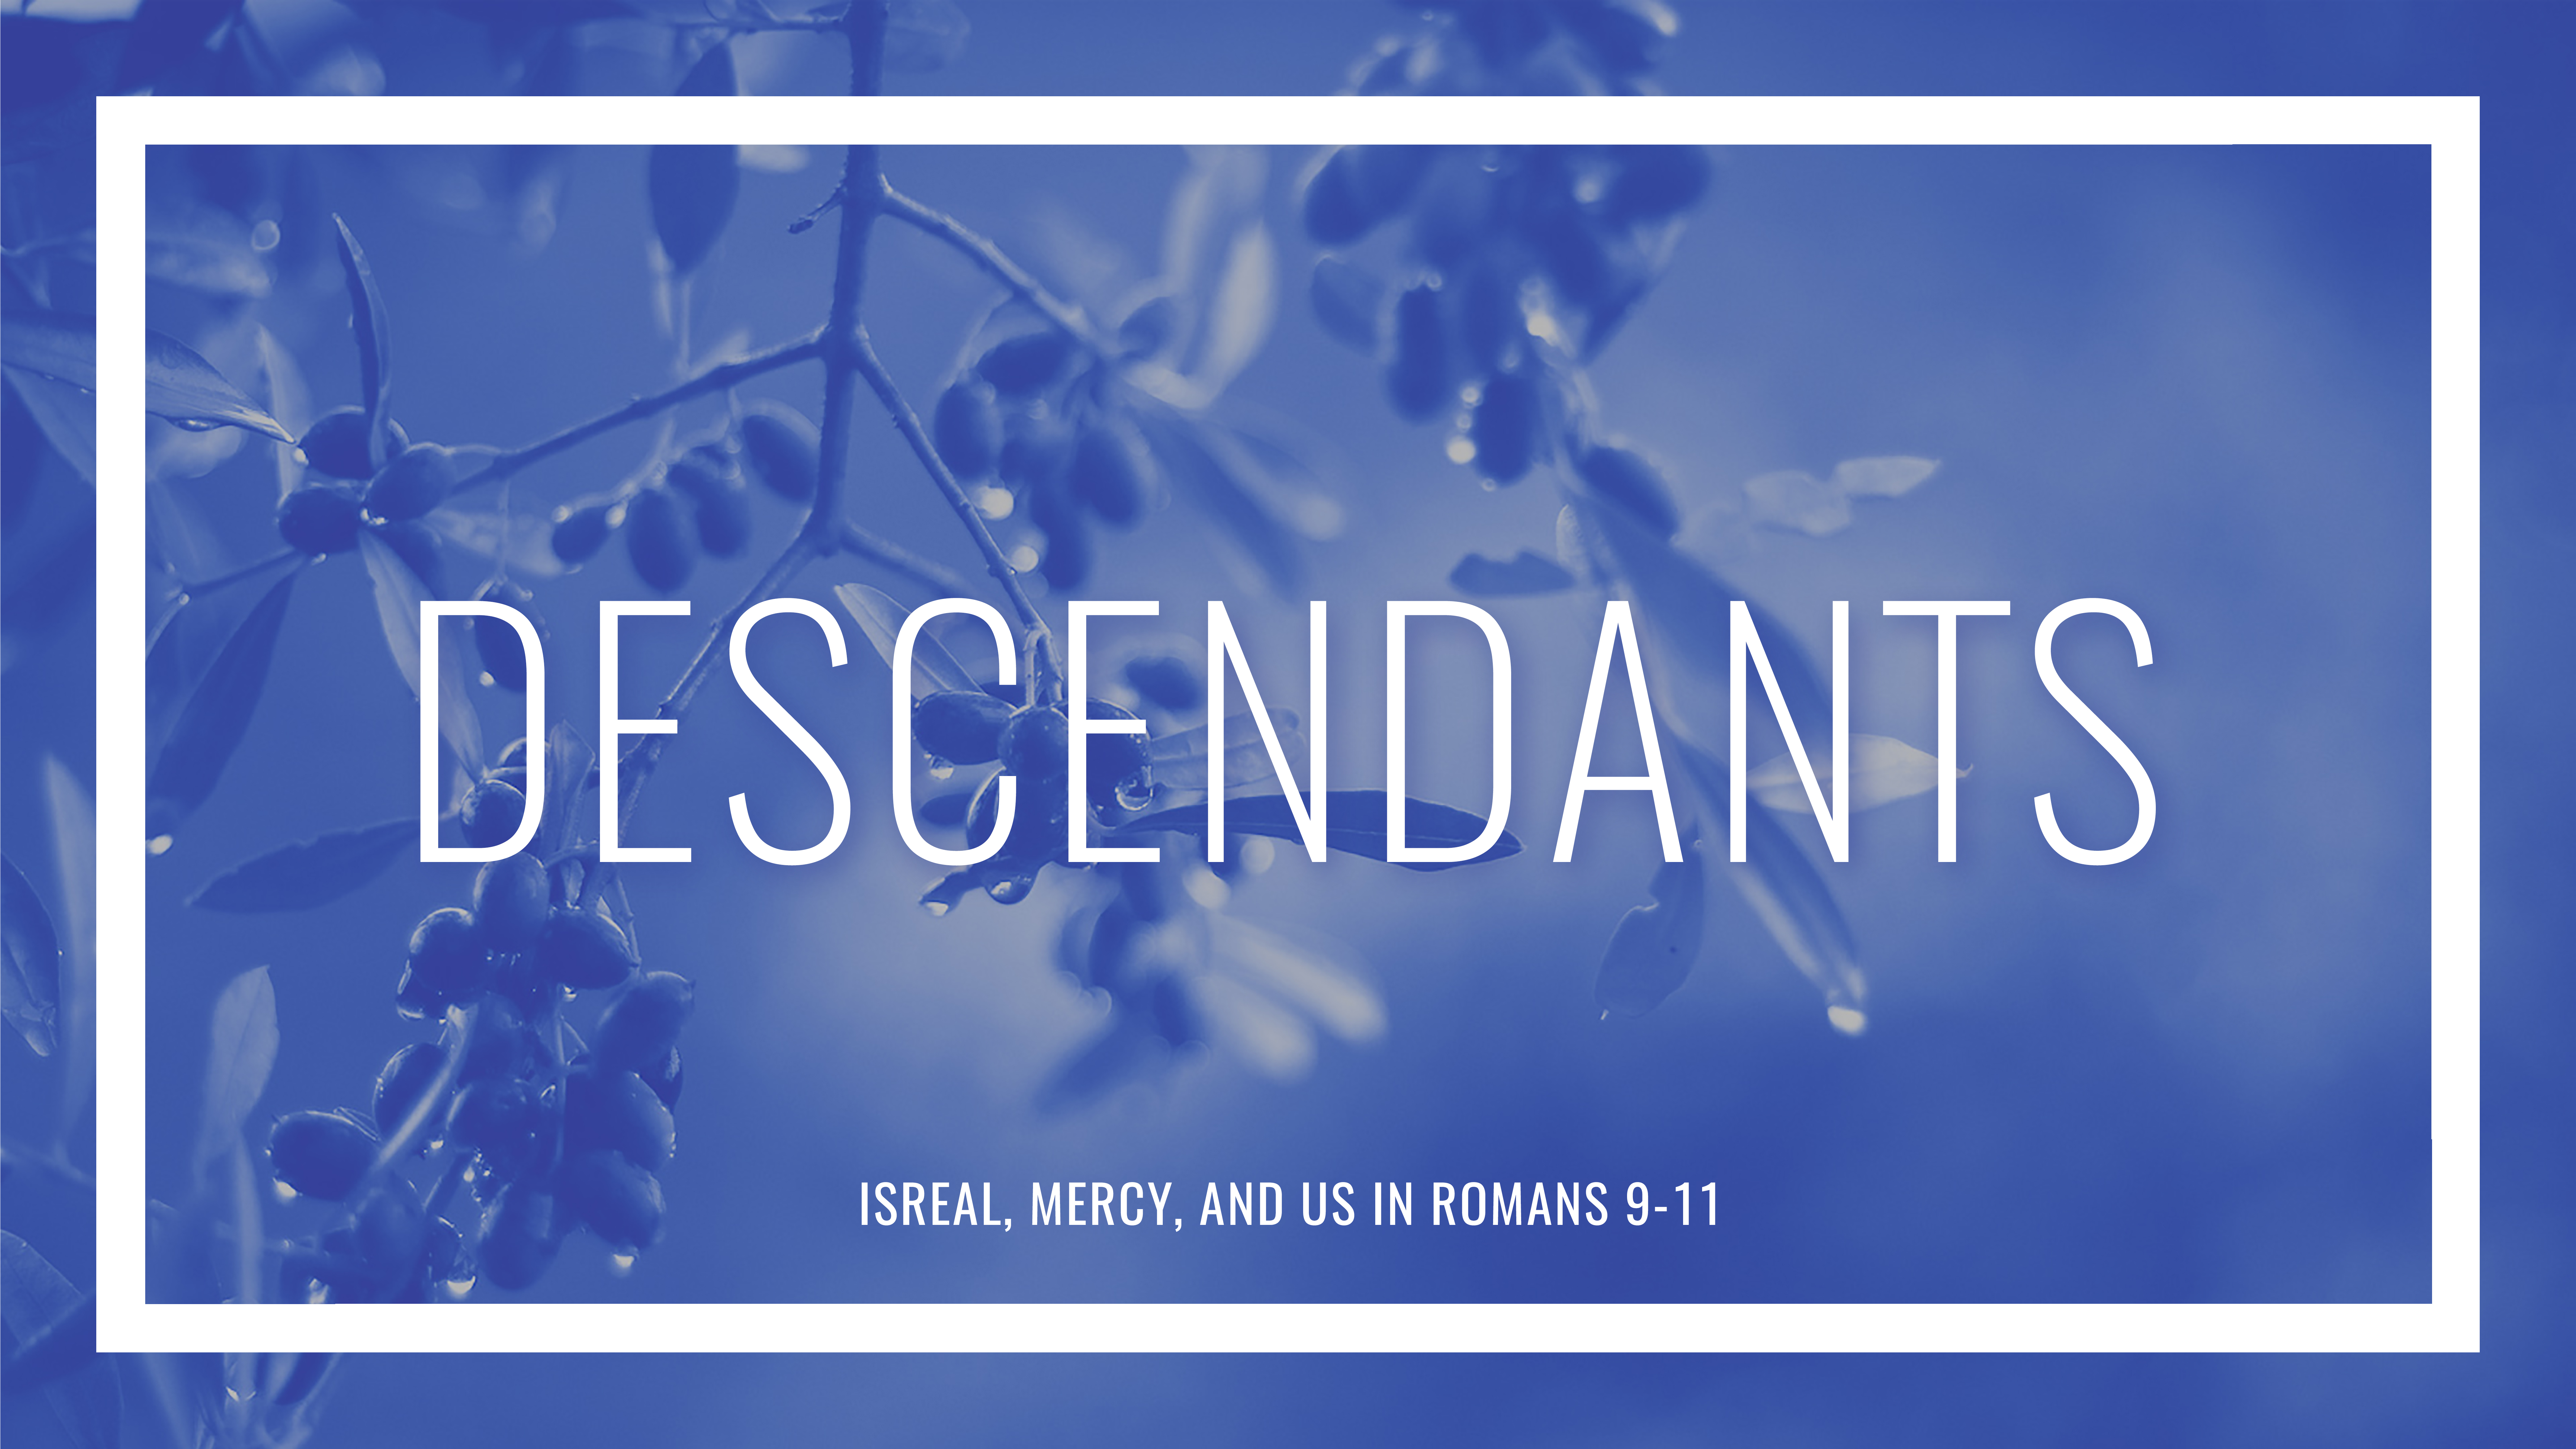 Featured image for “Descendants”